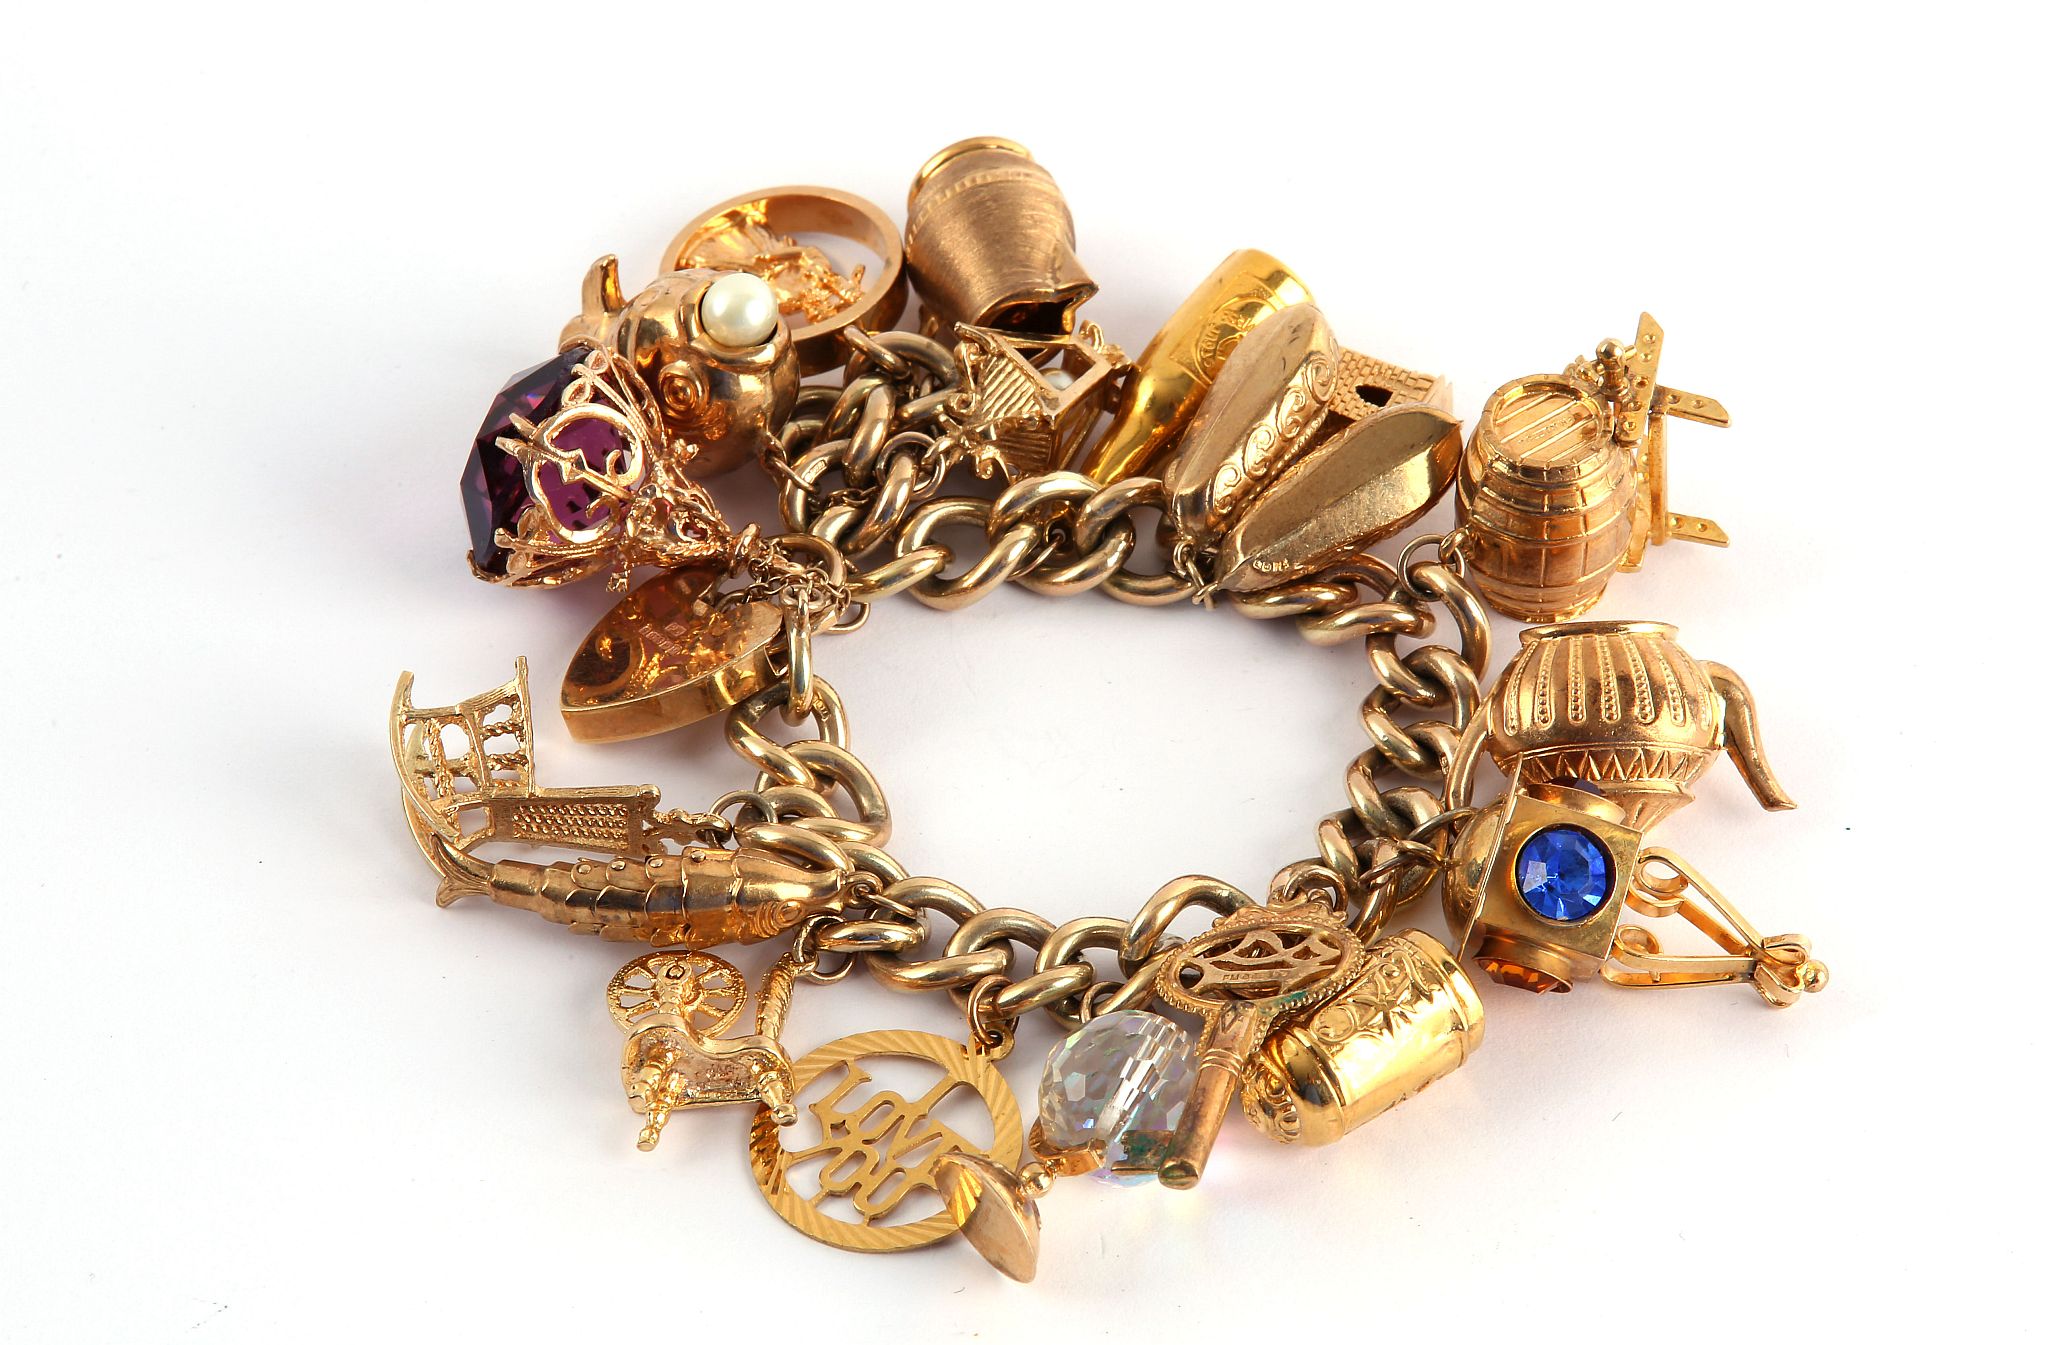 A charm bracelet, The 9 carat gold curb-link bracelet suspending various charms including various